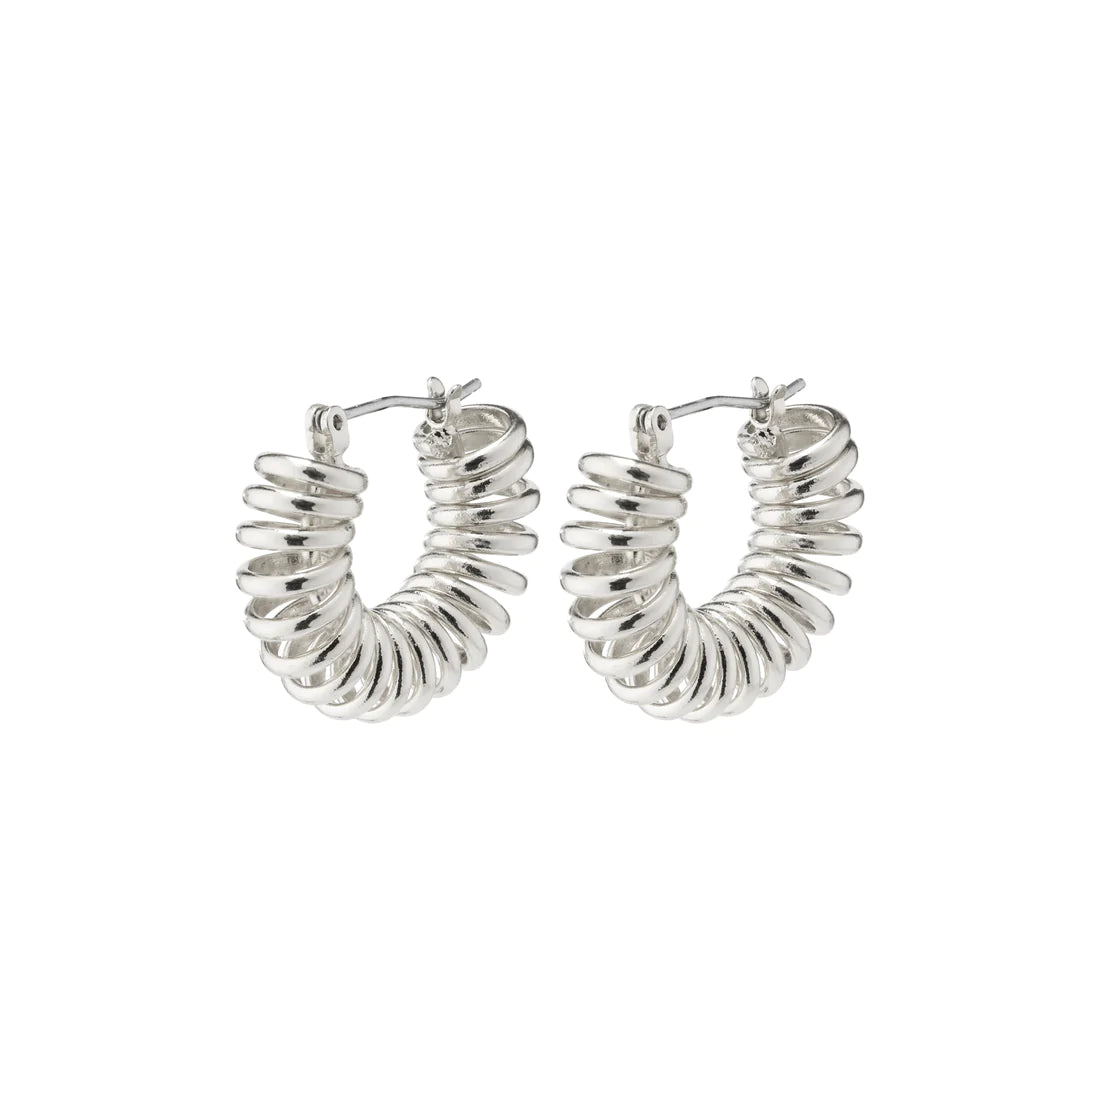 Sara small spiral hoop earrings silver-plated